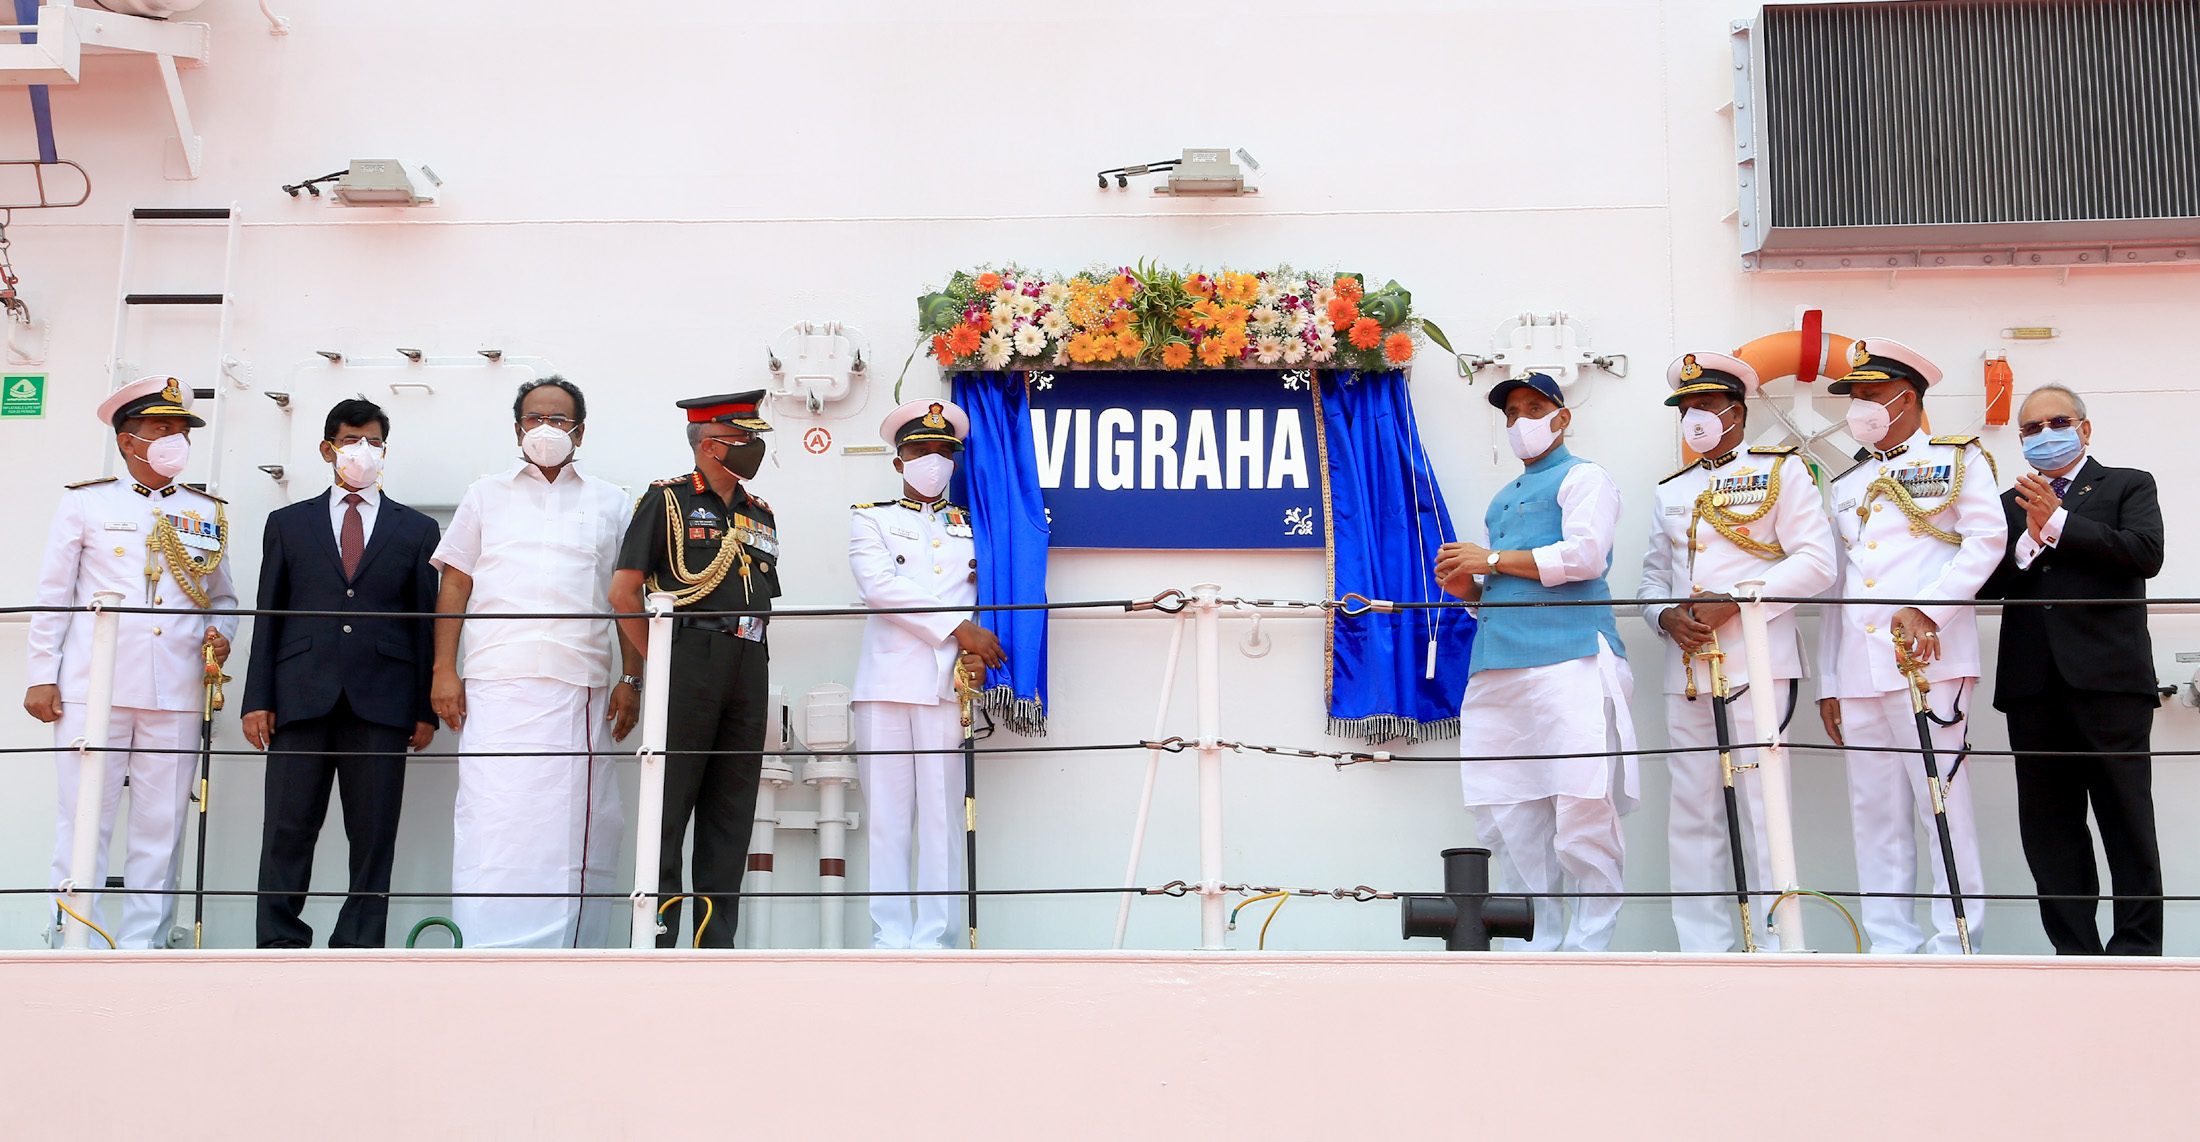 Coast Guard ship Vigraha